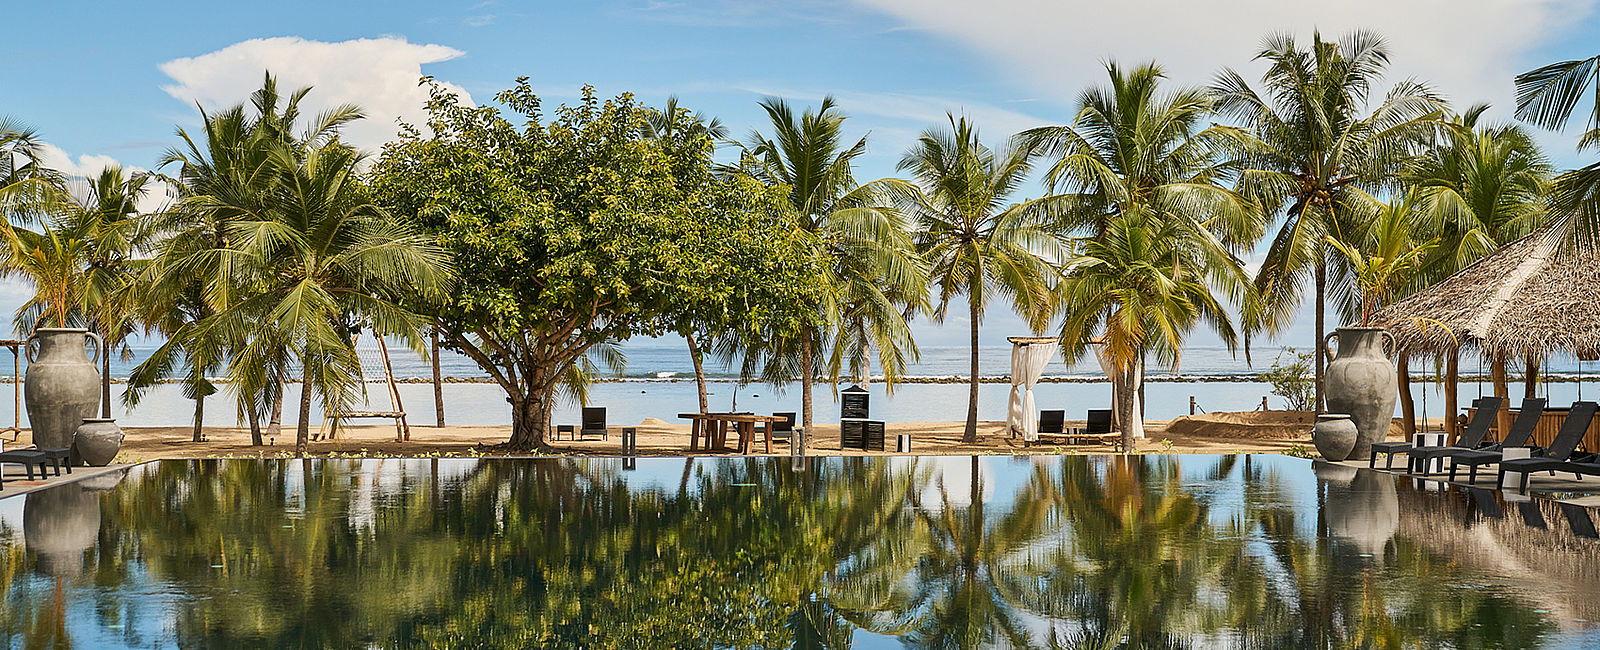 HOTELERÖFFNUNG NEWS
 Sri Lankas neue Luxusoase  
